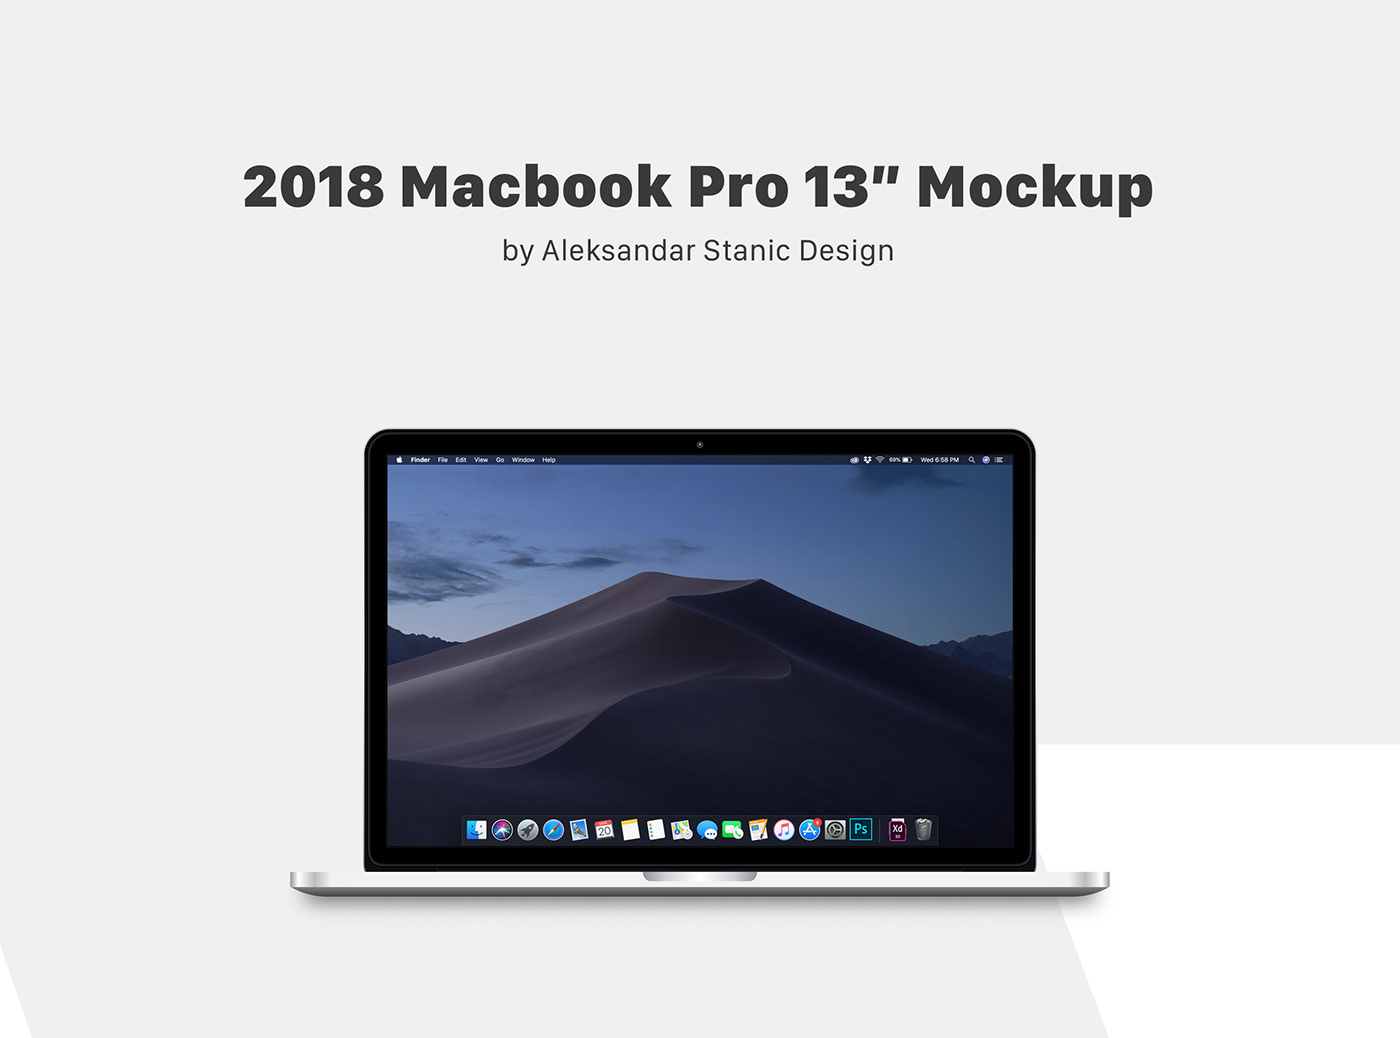 Download Free MacBook Pro 13 Mockup - FreeMockup.net